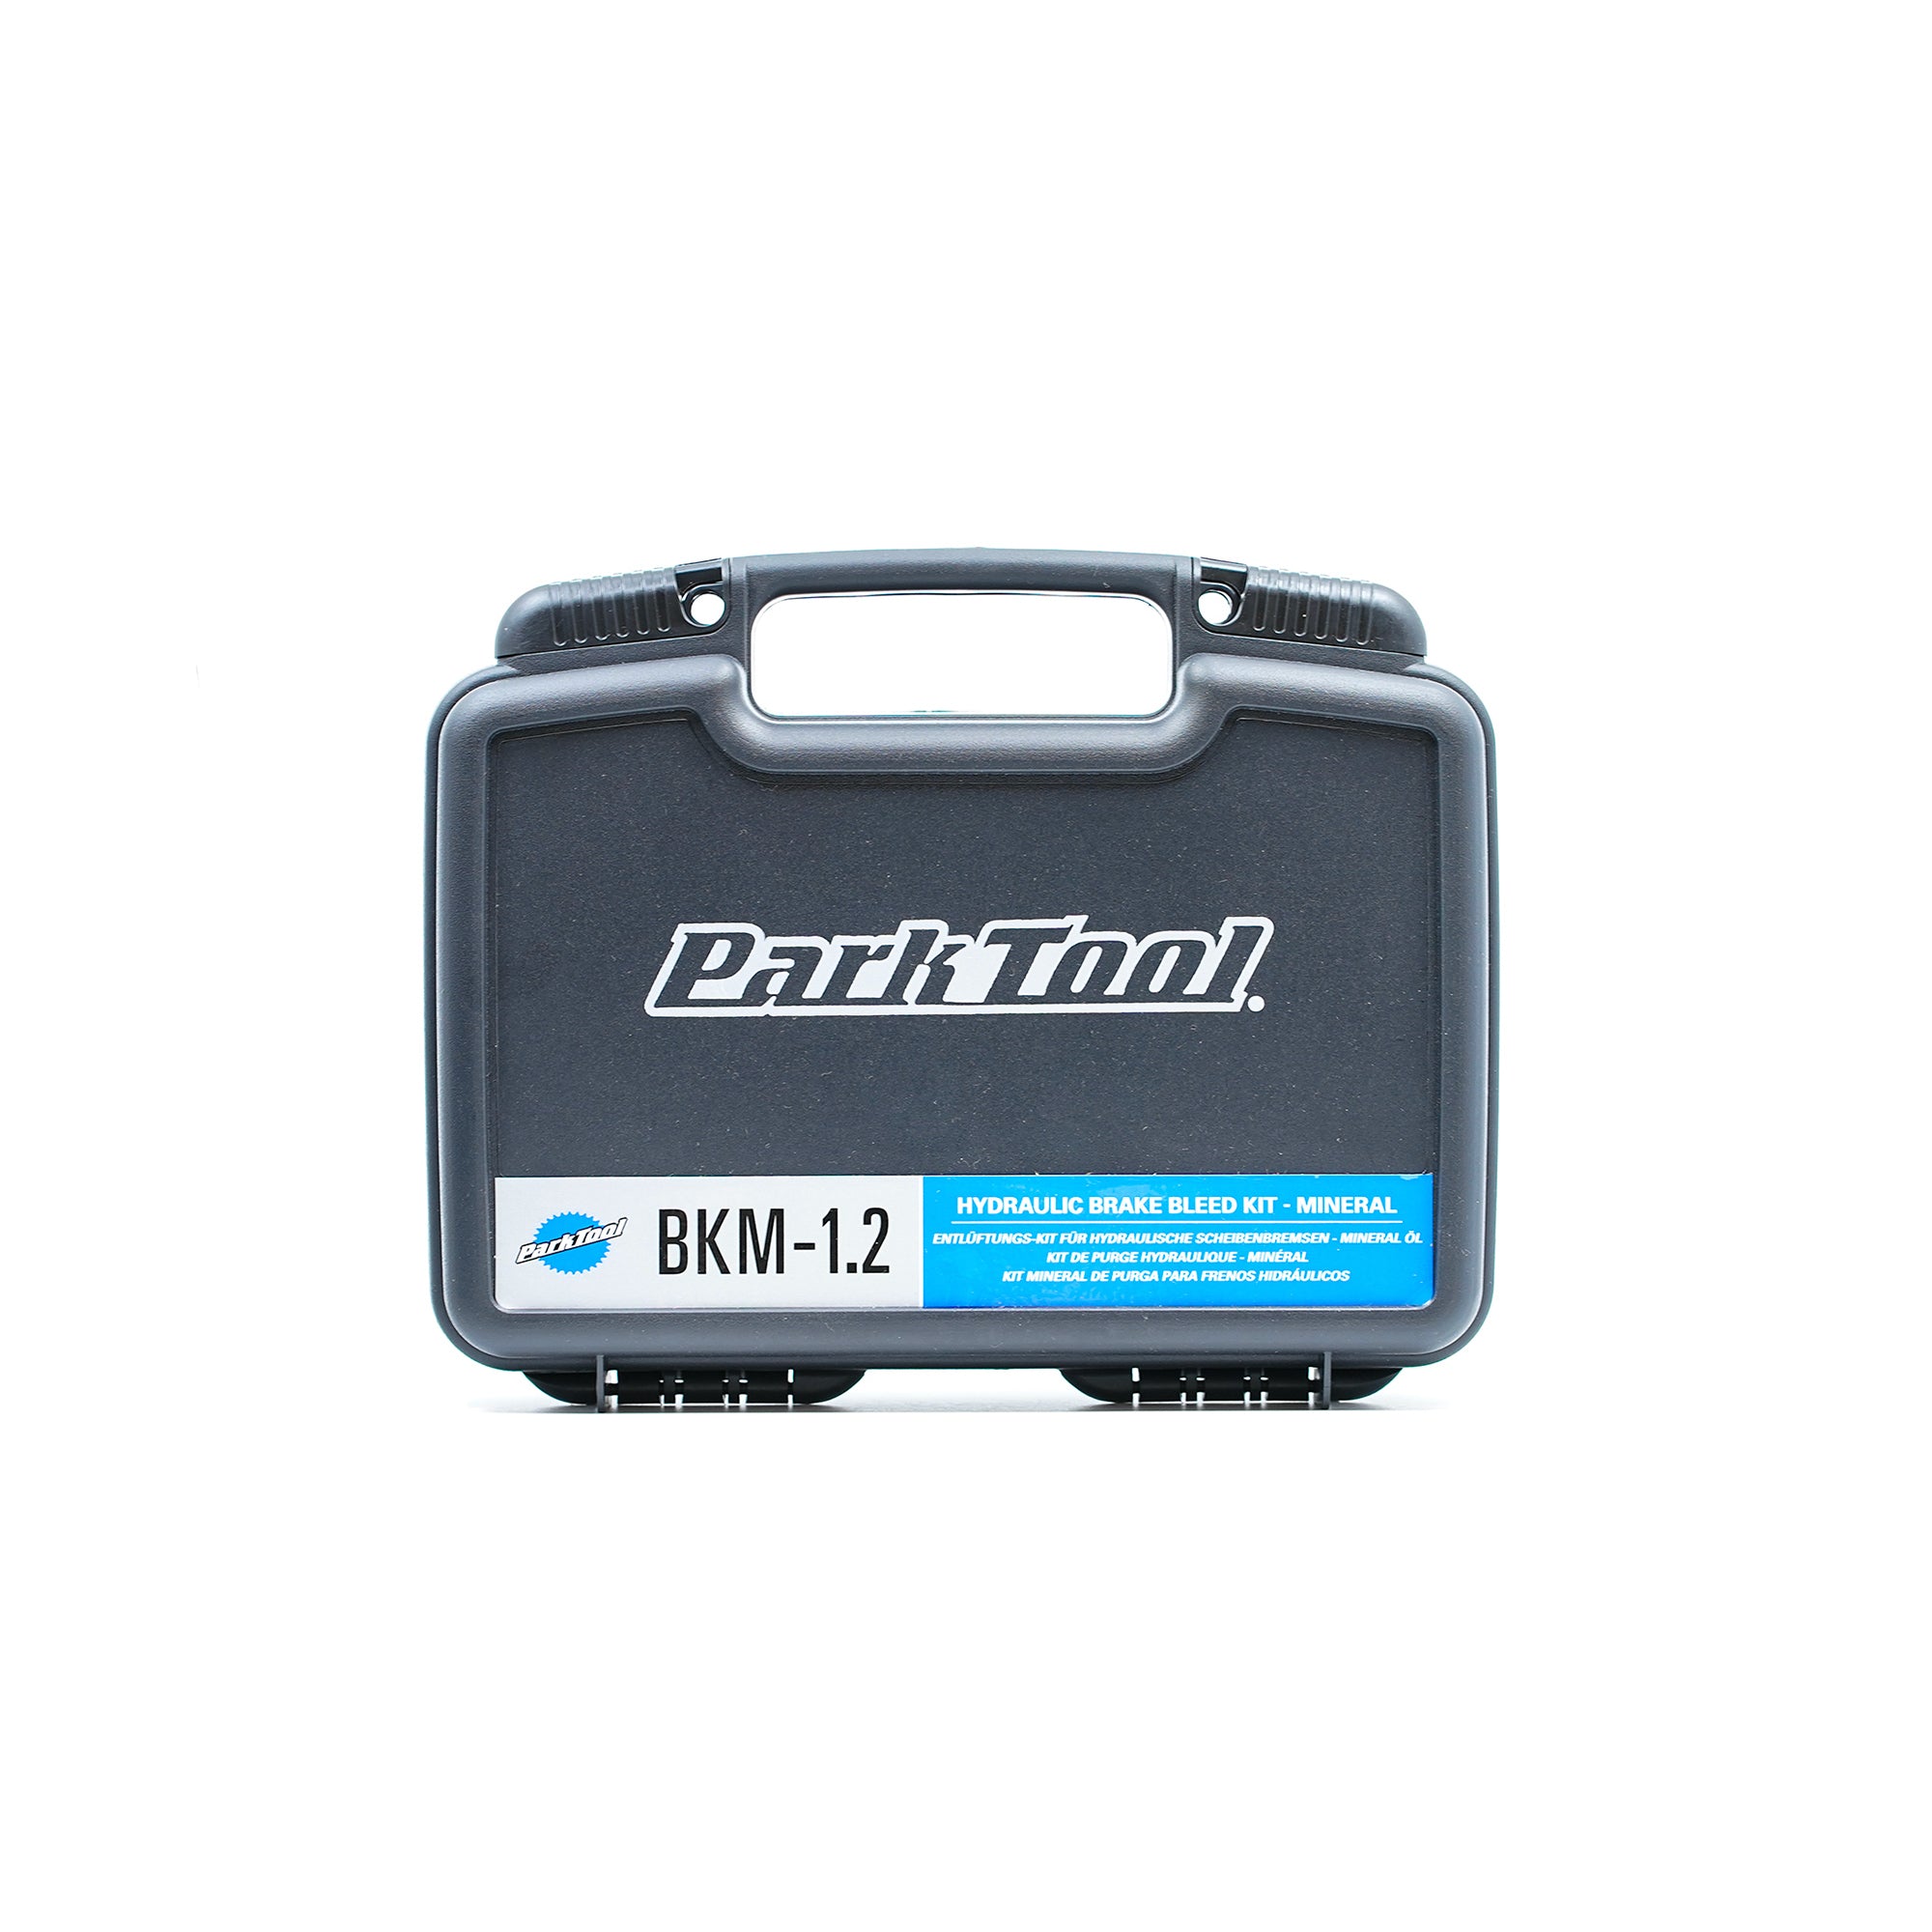 BKD-1.2 Hydraulic Brake Bleed Kit - DOT